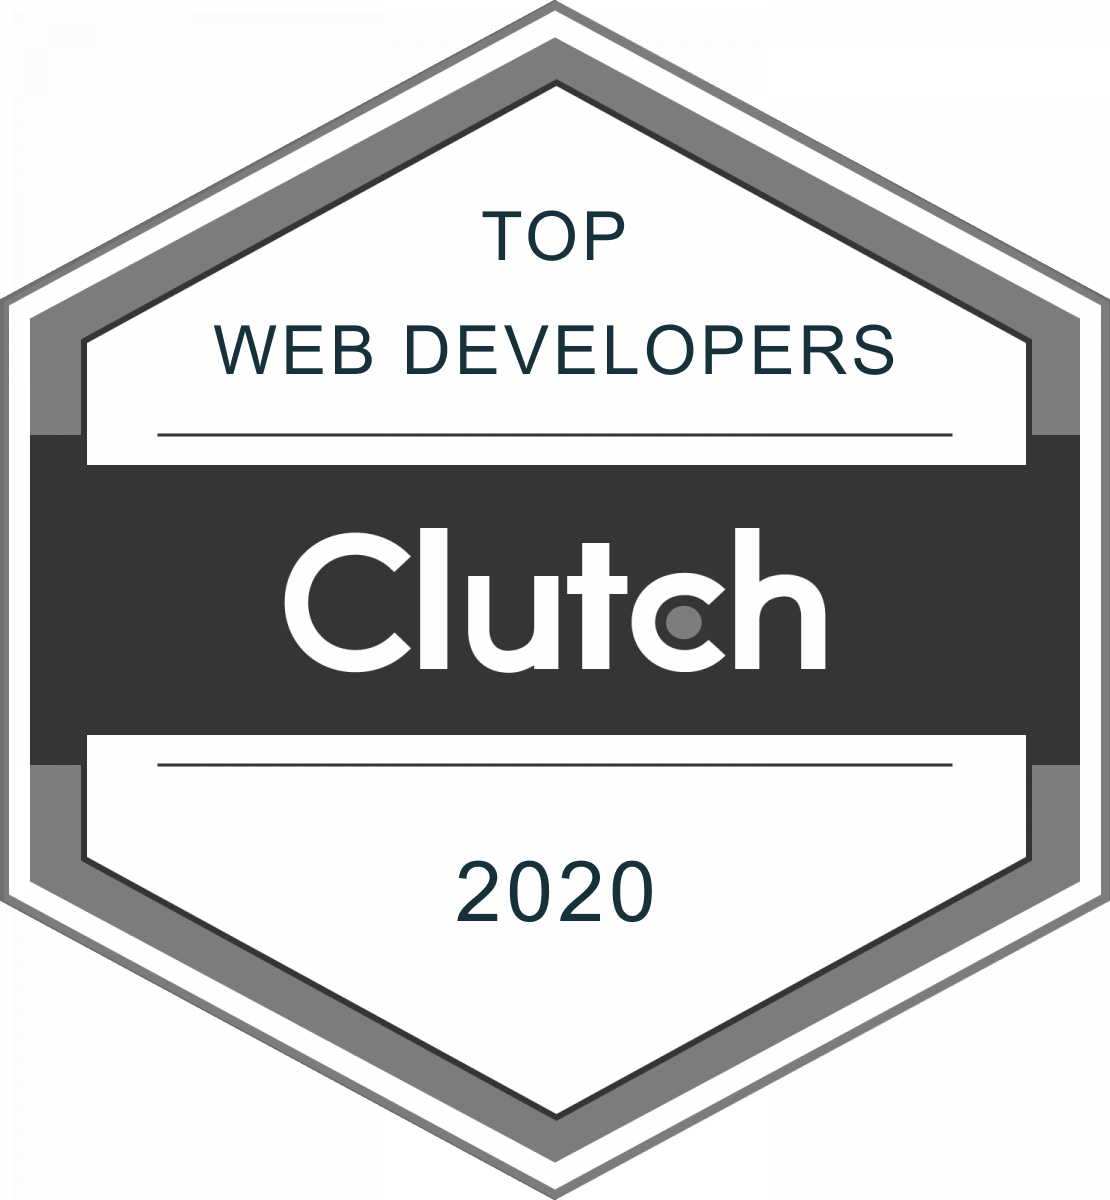 Top Web Developers 2020 Clutch